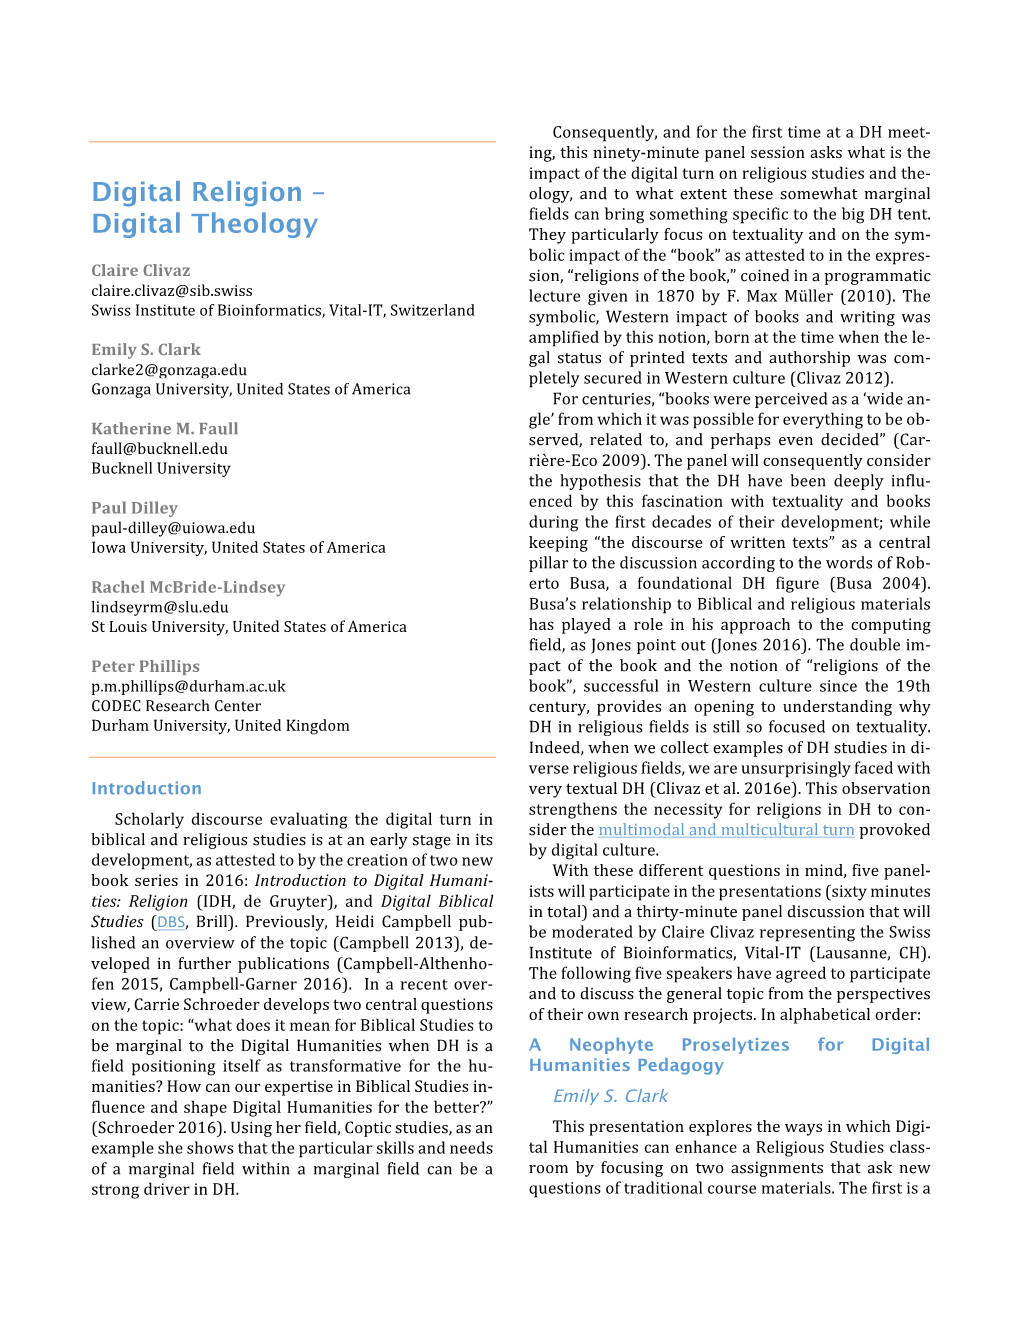 Digital Religion – Digital Theology